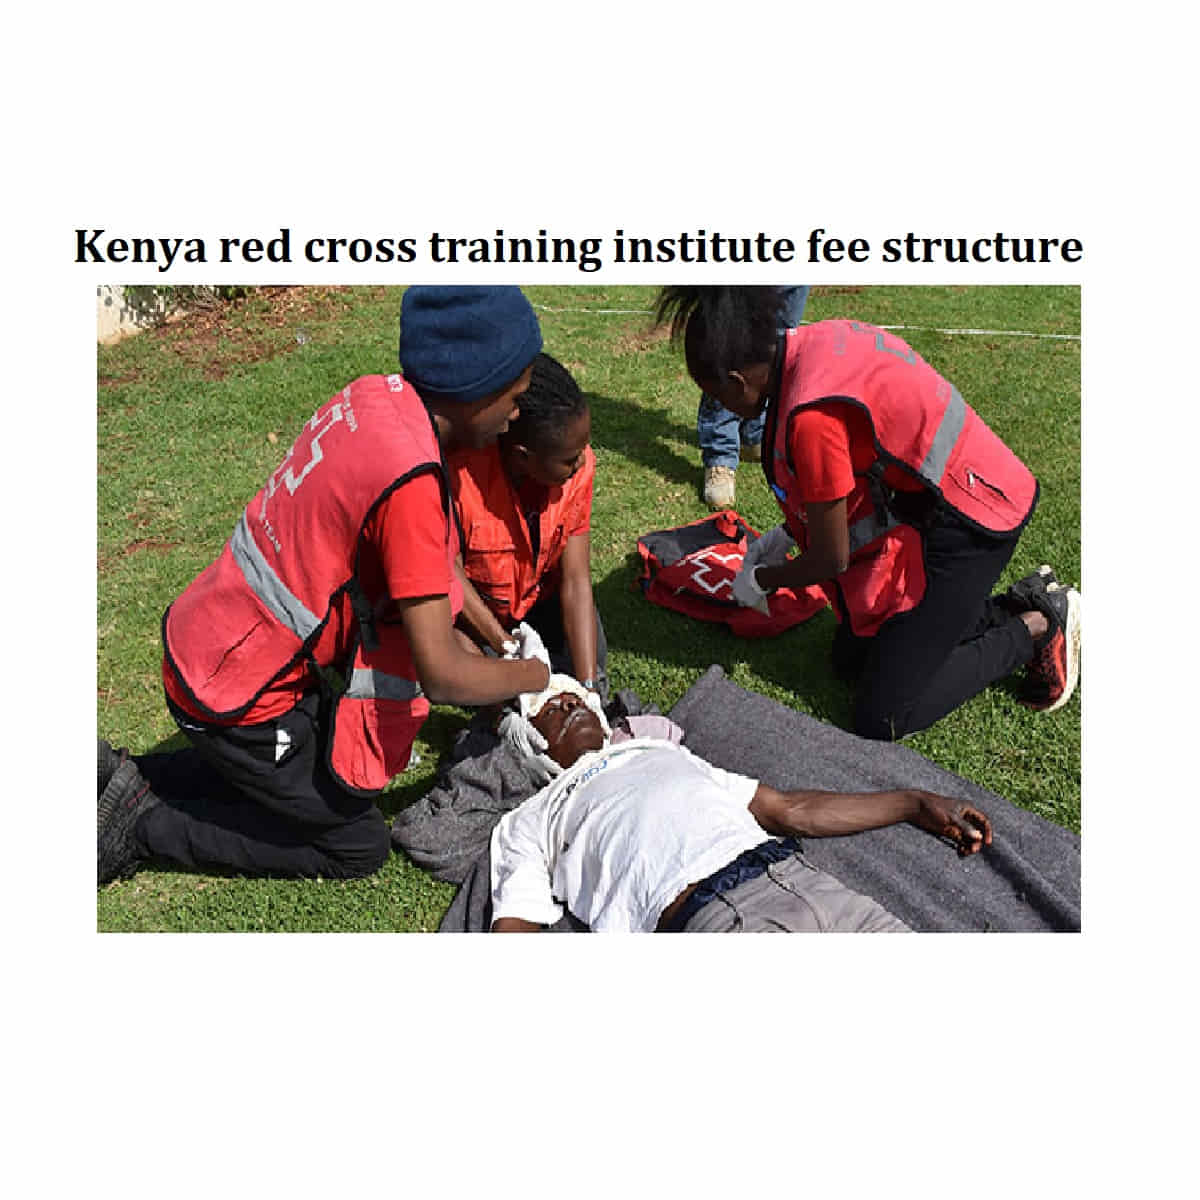 Kenya red cross training institute fee structure